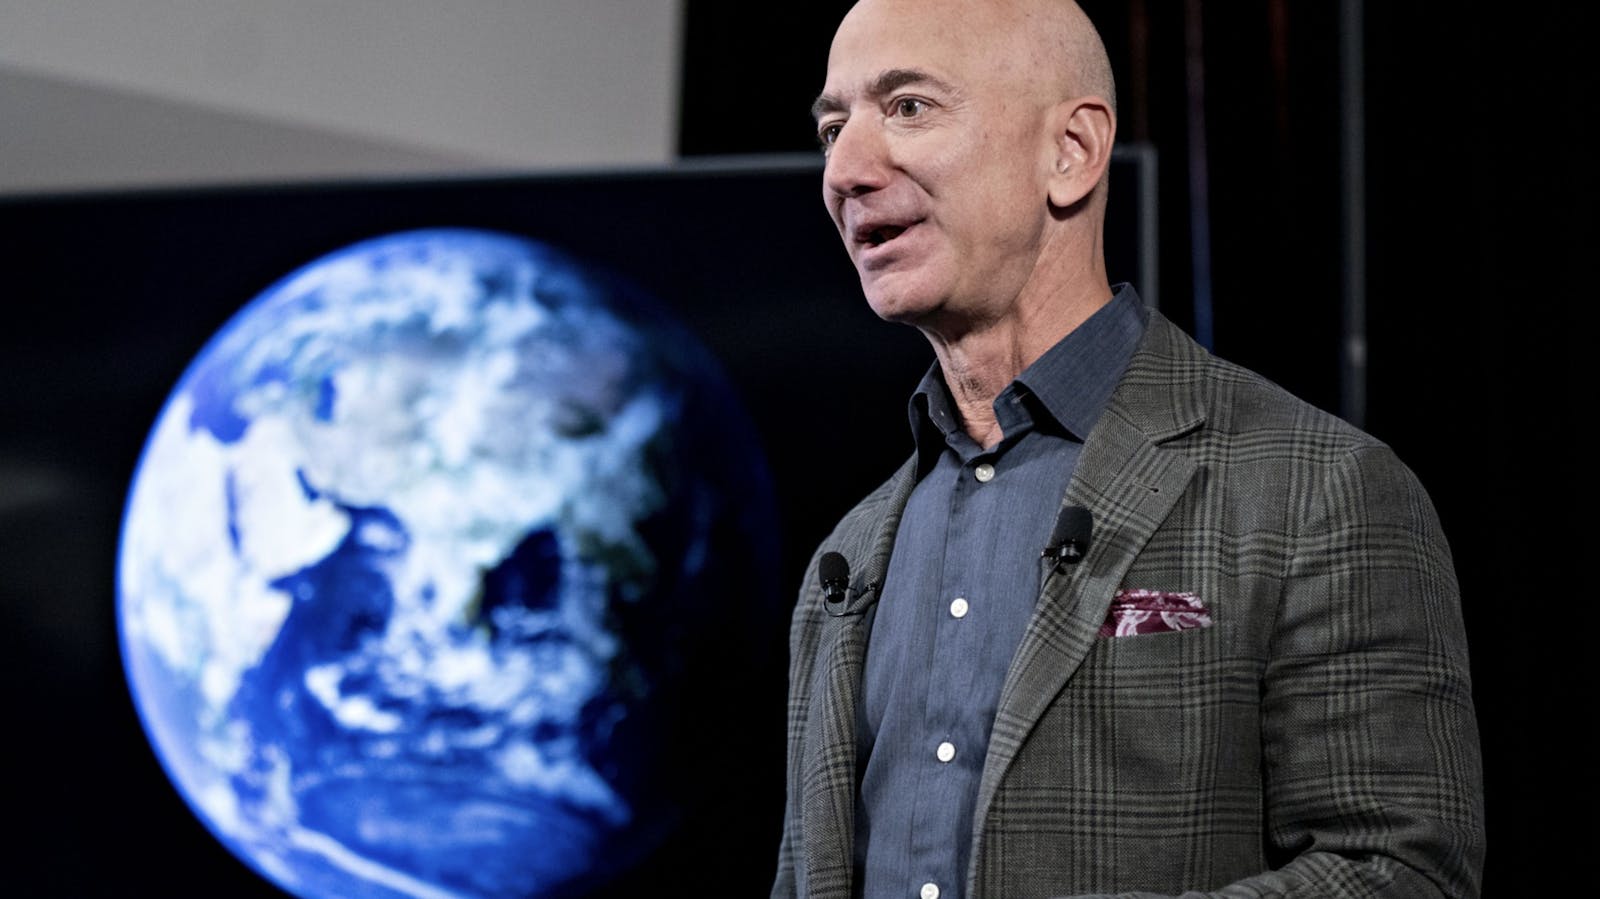 Amazon founder Jeff Bezos. Photo by Bloomberg